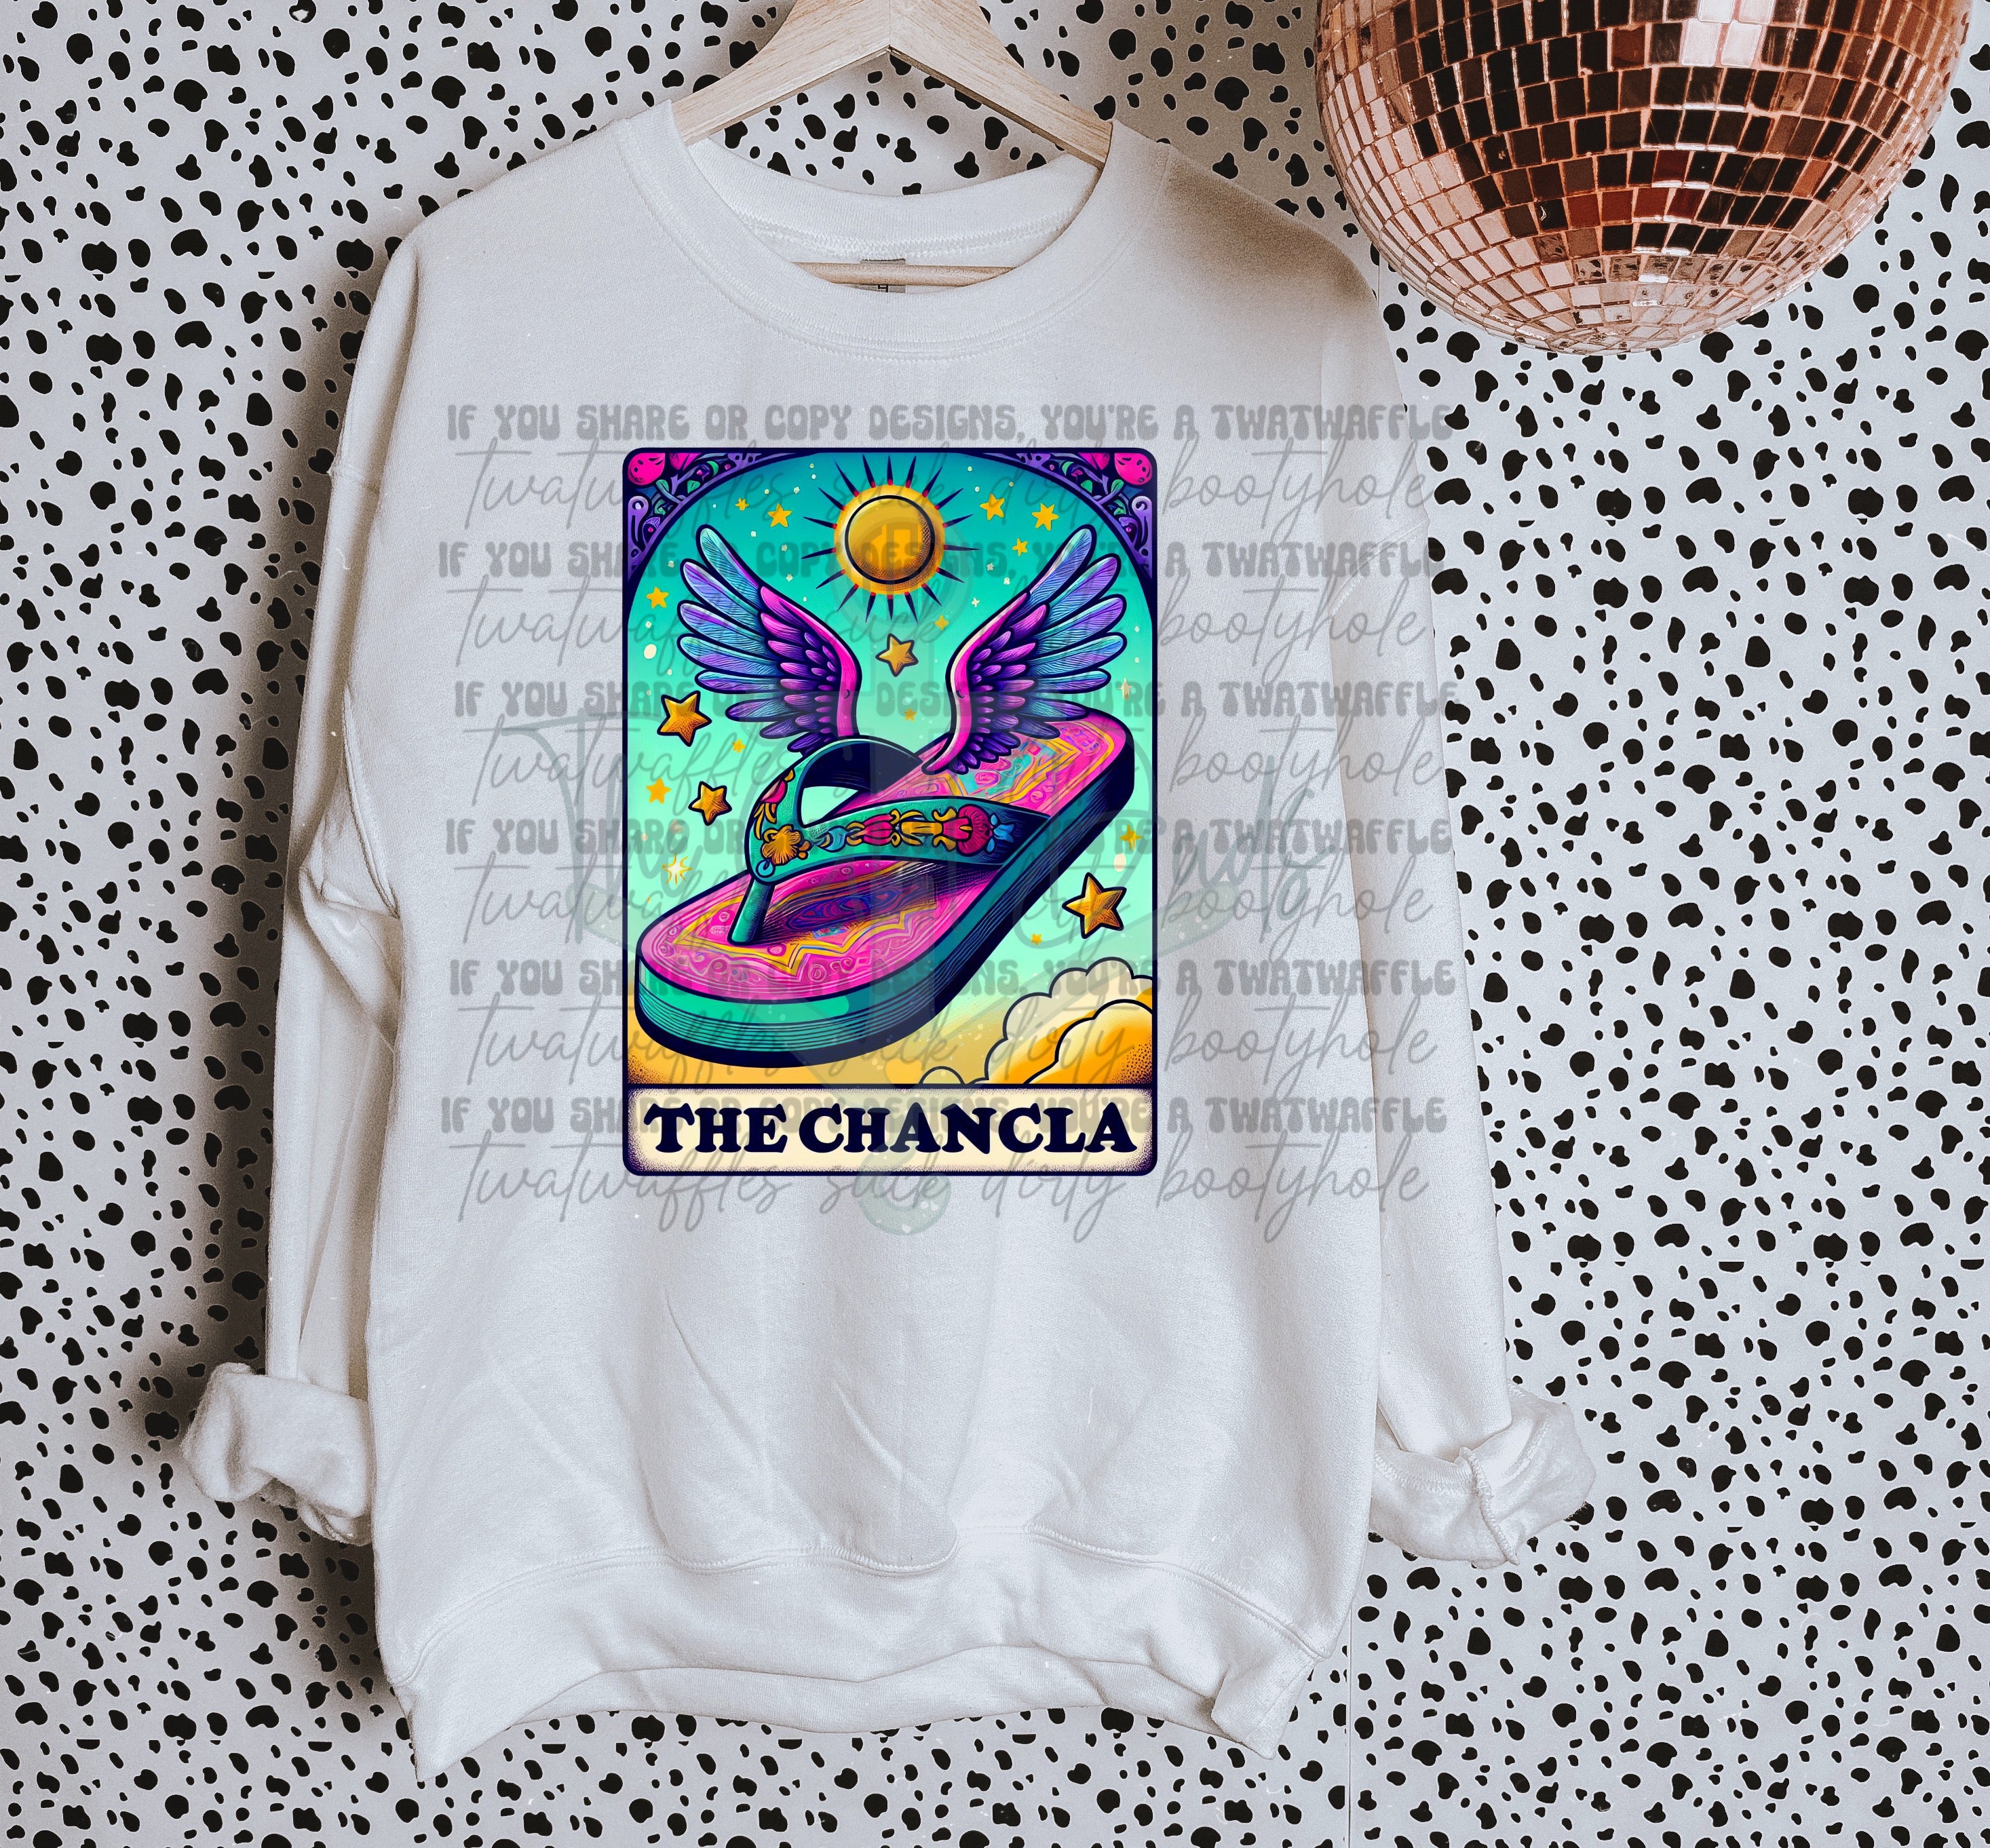 The Chancla Tarot 3 Top Design